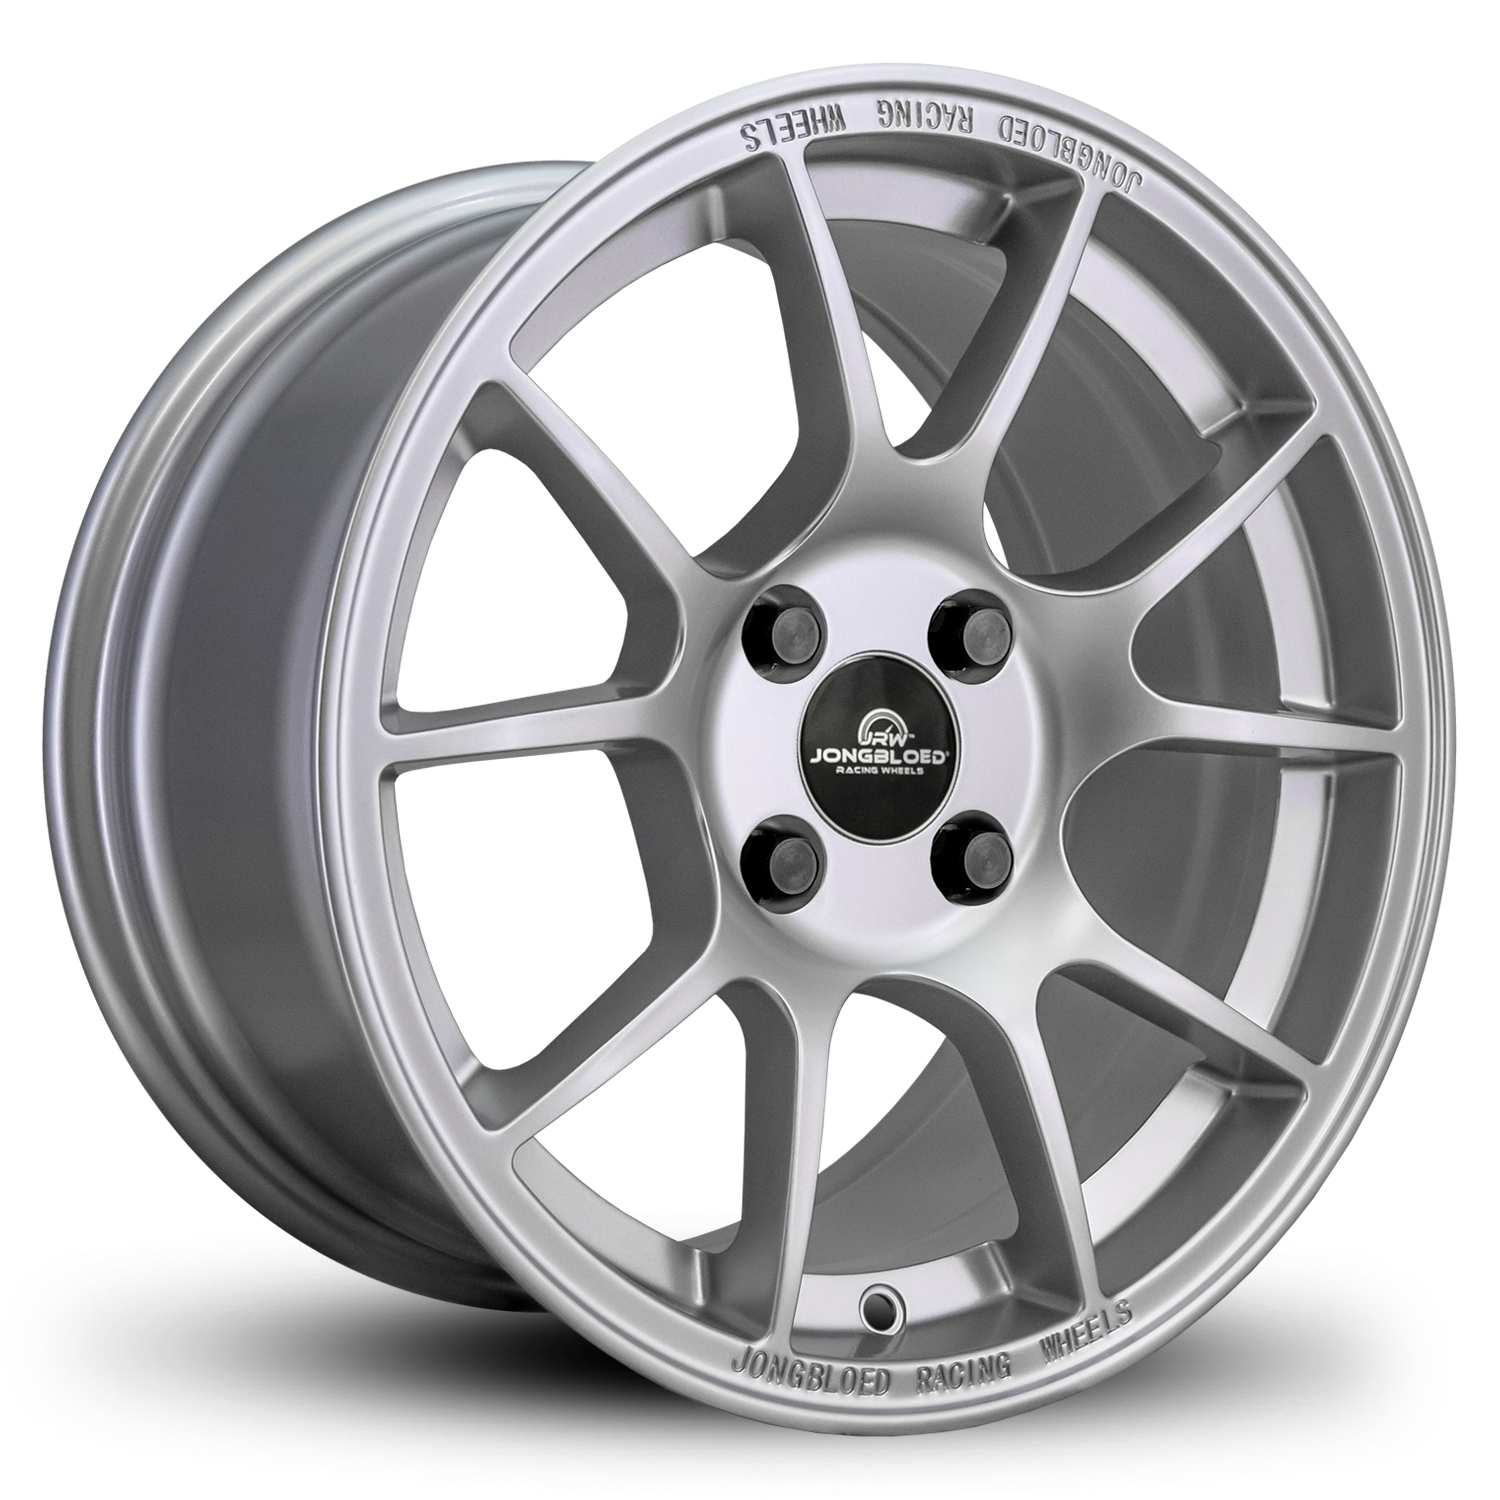 Jongbloed Racing Wheels Series 500 Flow Formed Racing Wheel Rims Mazda Miata & Porsche Boxster n All Gloss Silver